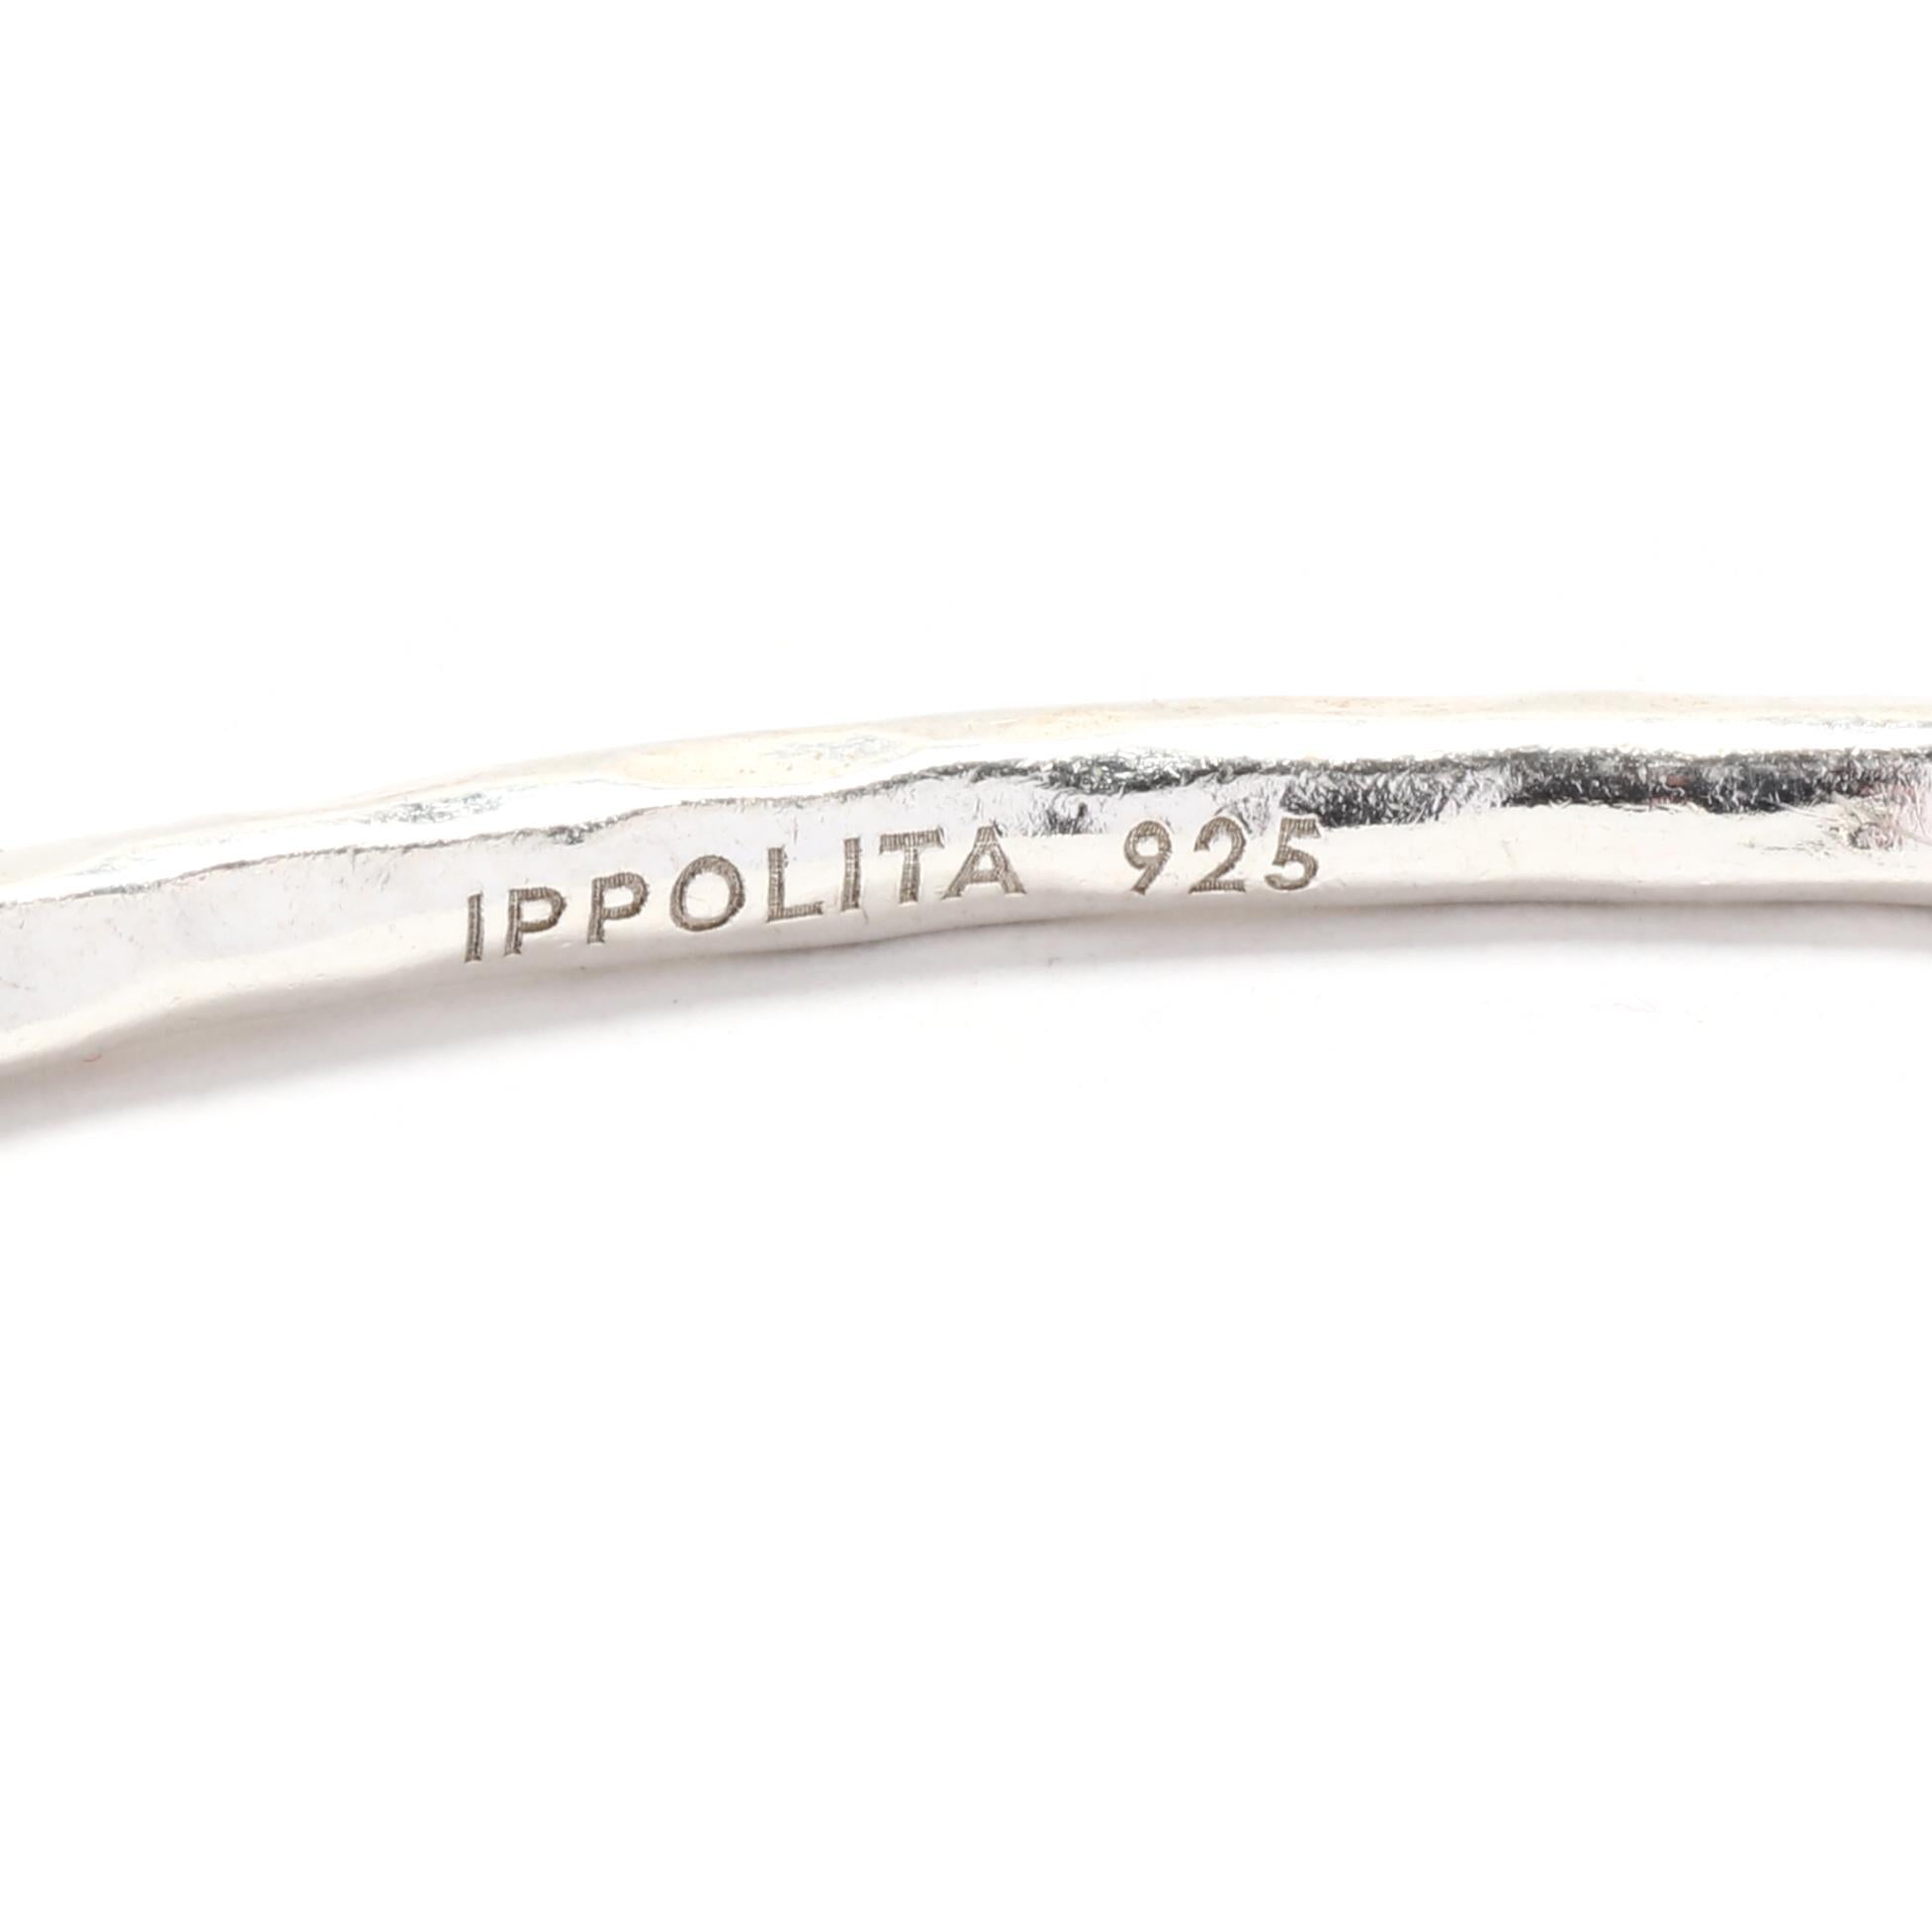 Women's or Men's Ippolita Bangle Bracelet, Sterling Silver, Length 7.75 Inches, Stackable